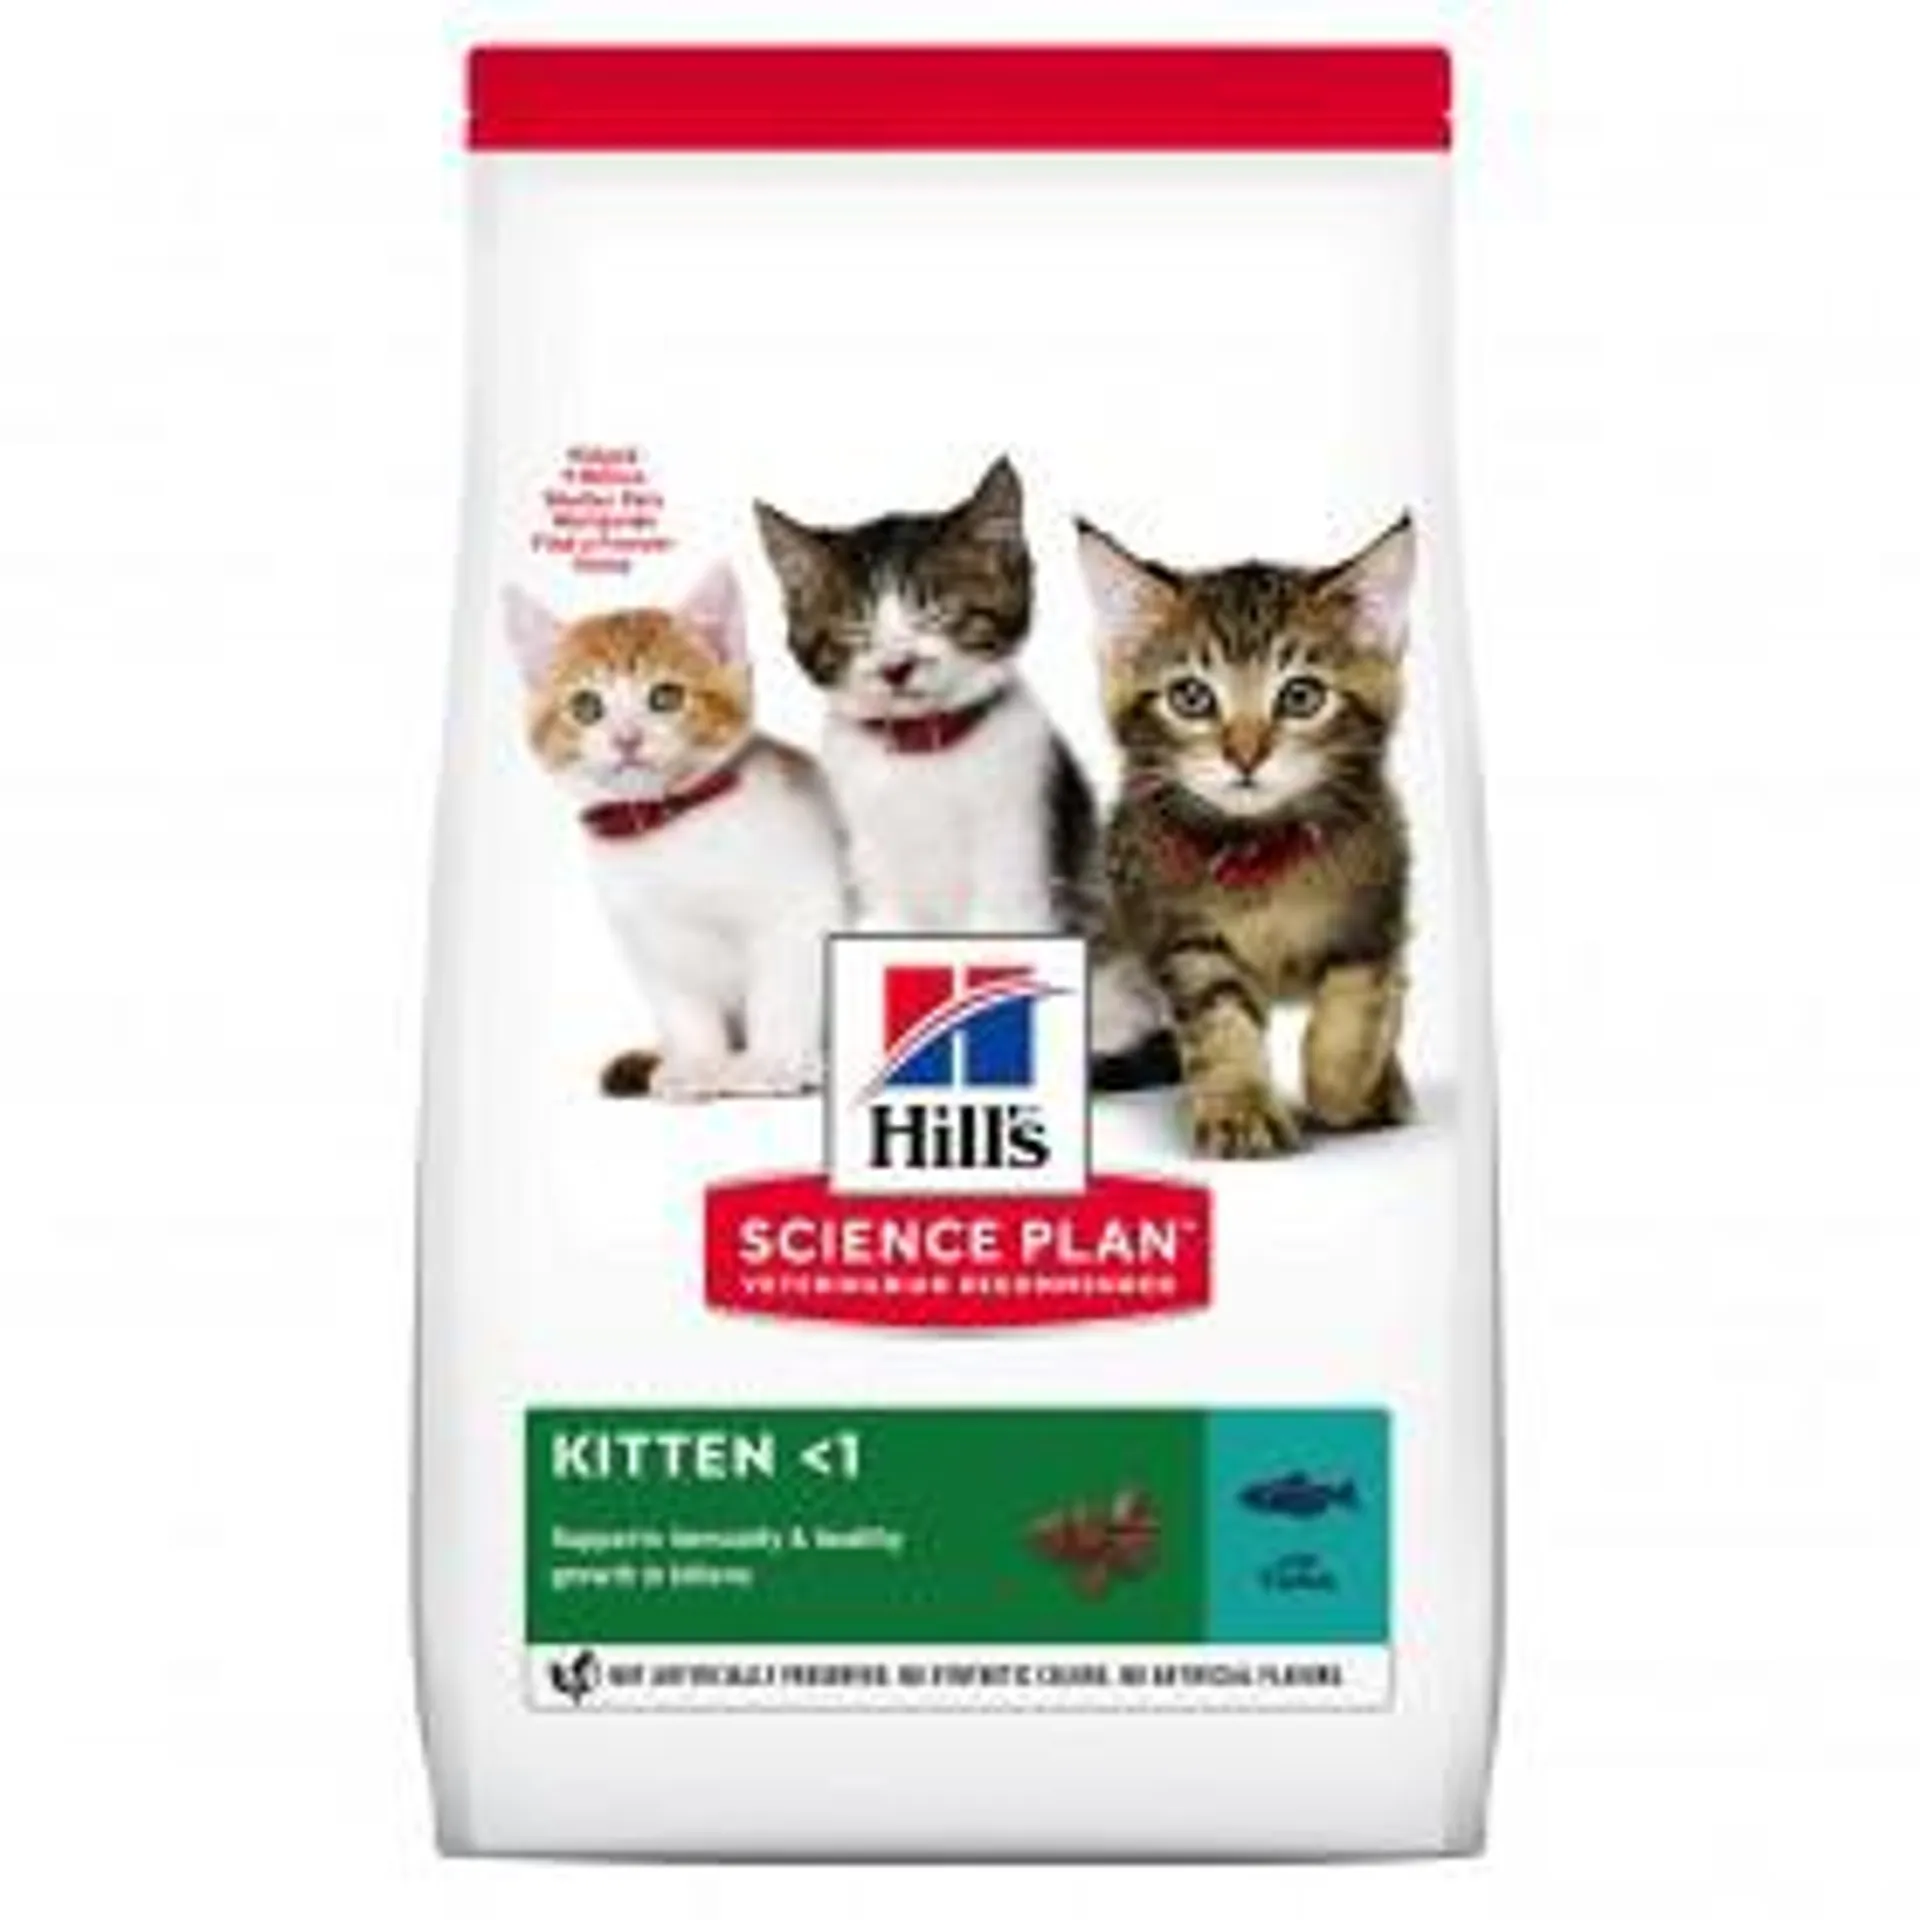 Hill's Science Plan Kitten alimento seco gatitos sabor atún